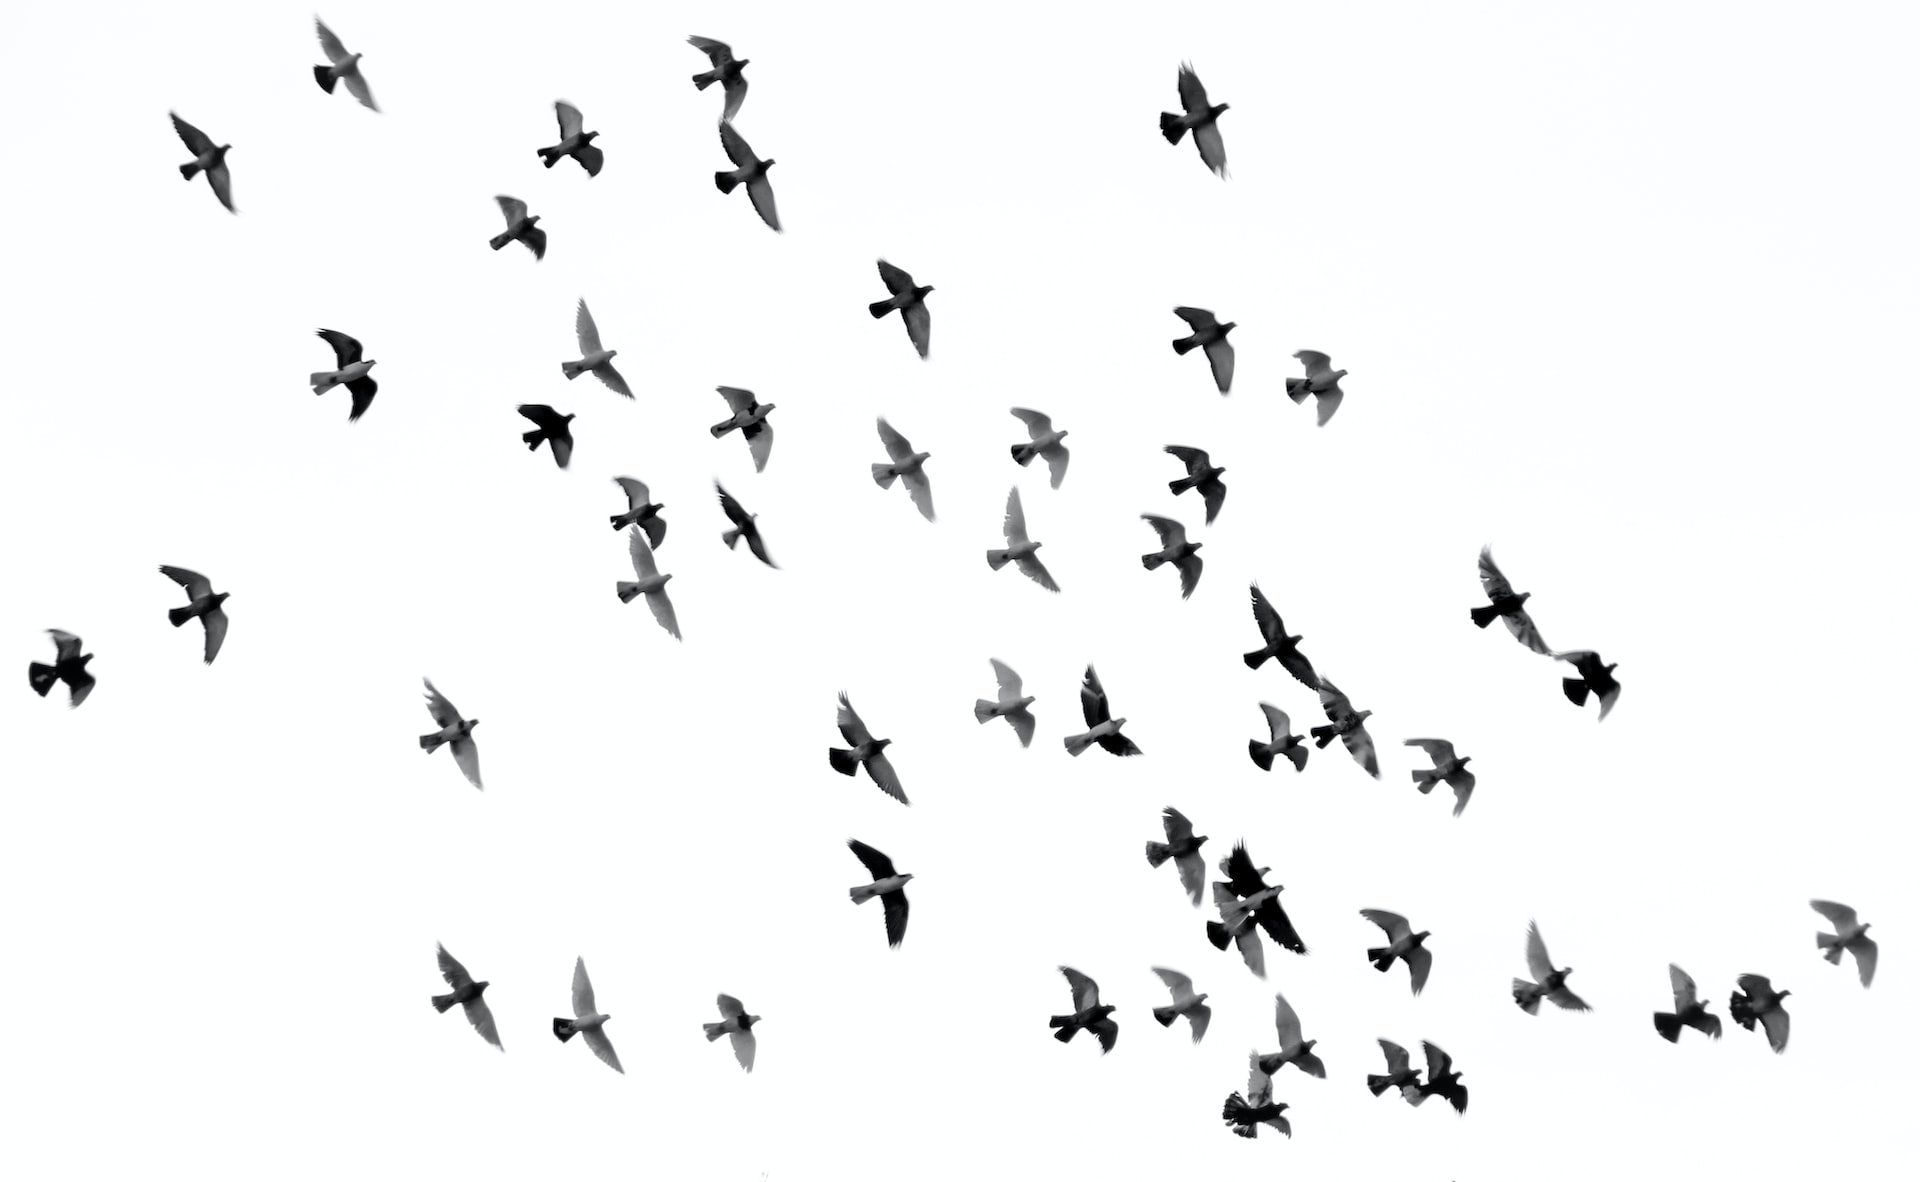 A flock of black birds flying in the sky